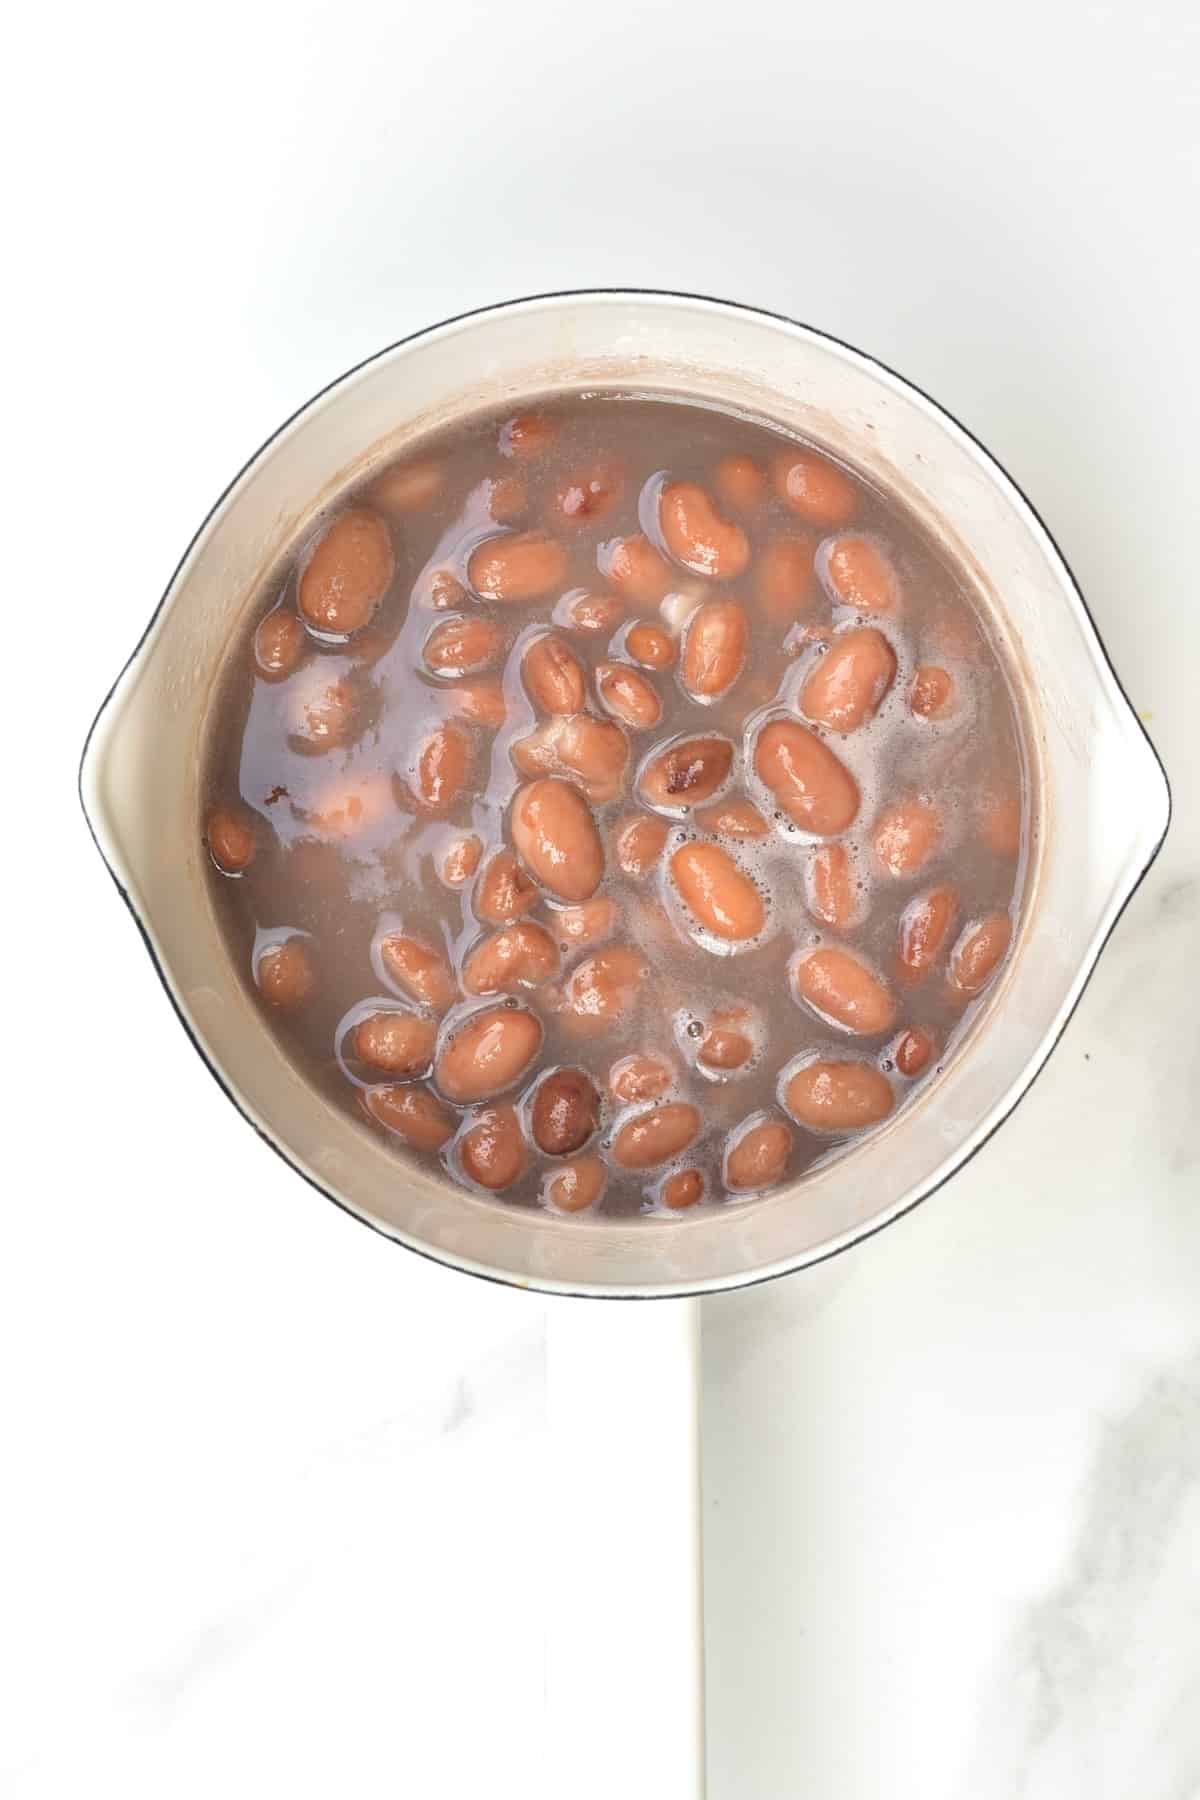 Pinto beans in a pot